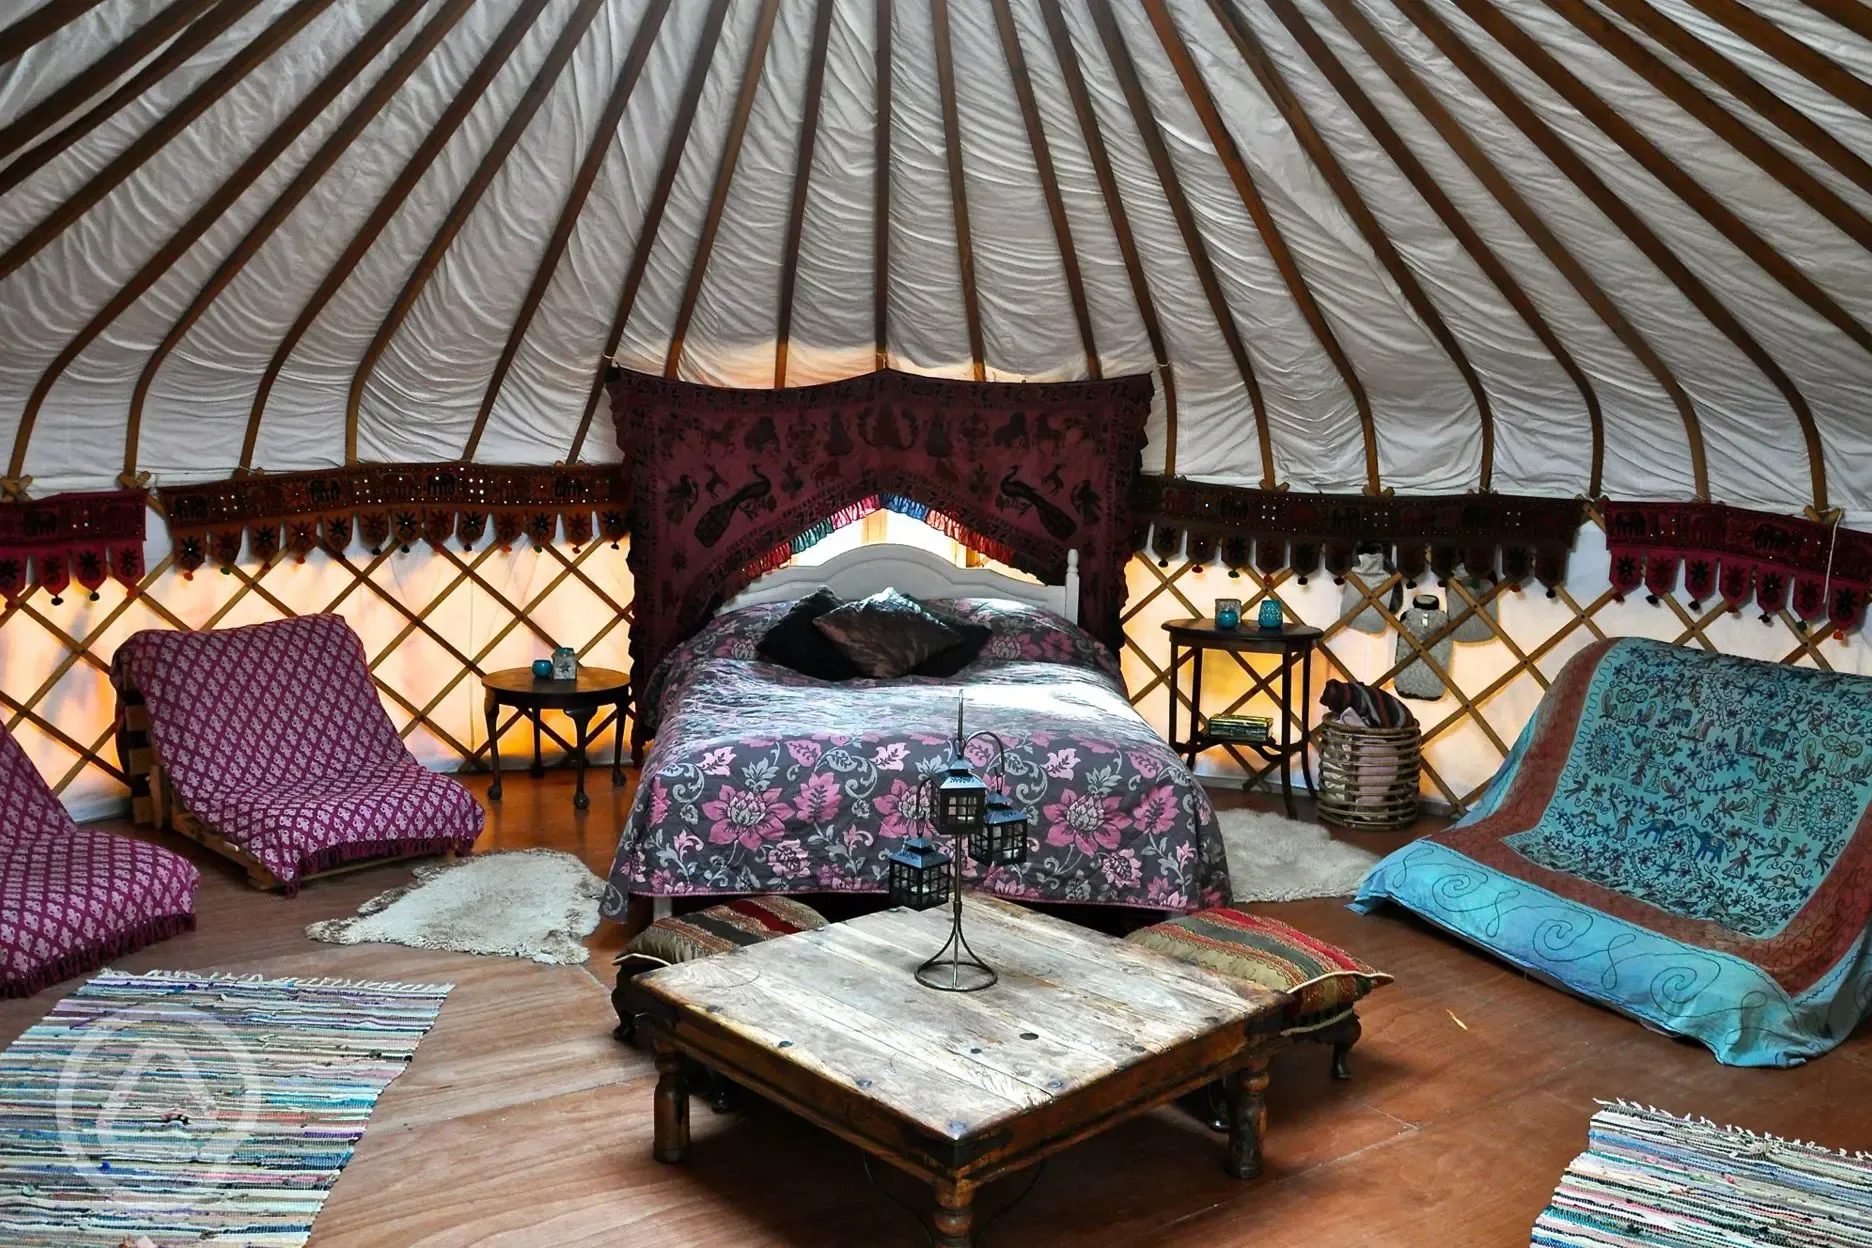 Woodland yurt interior